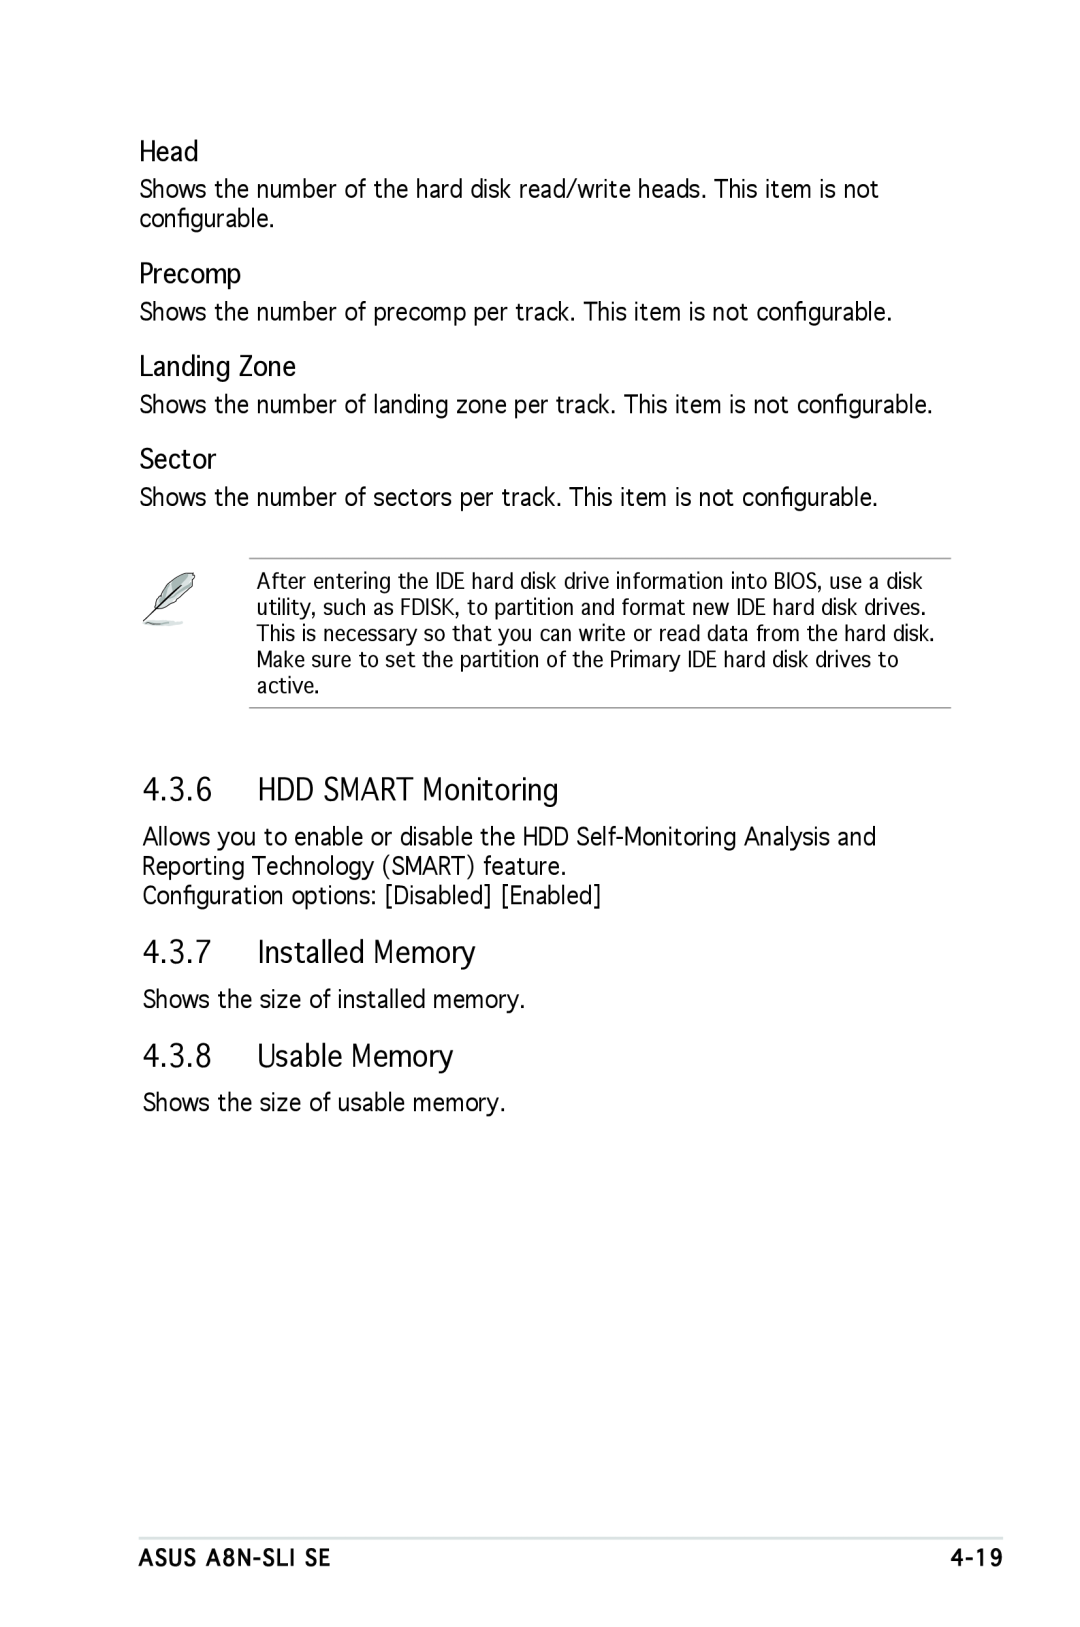 Asus A8N-SLI SE manual HDD SMART Monitoring, Installed Memory, Usable Memory, Precomp, Landing Zone, Head, Sector 